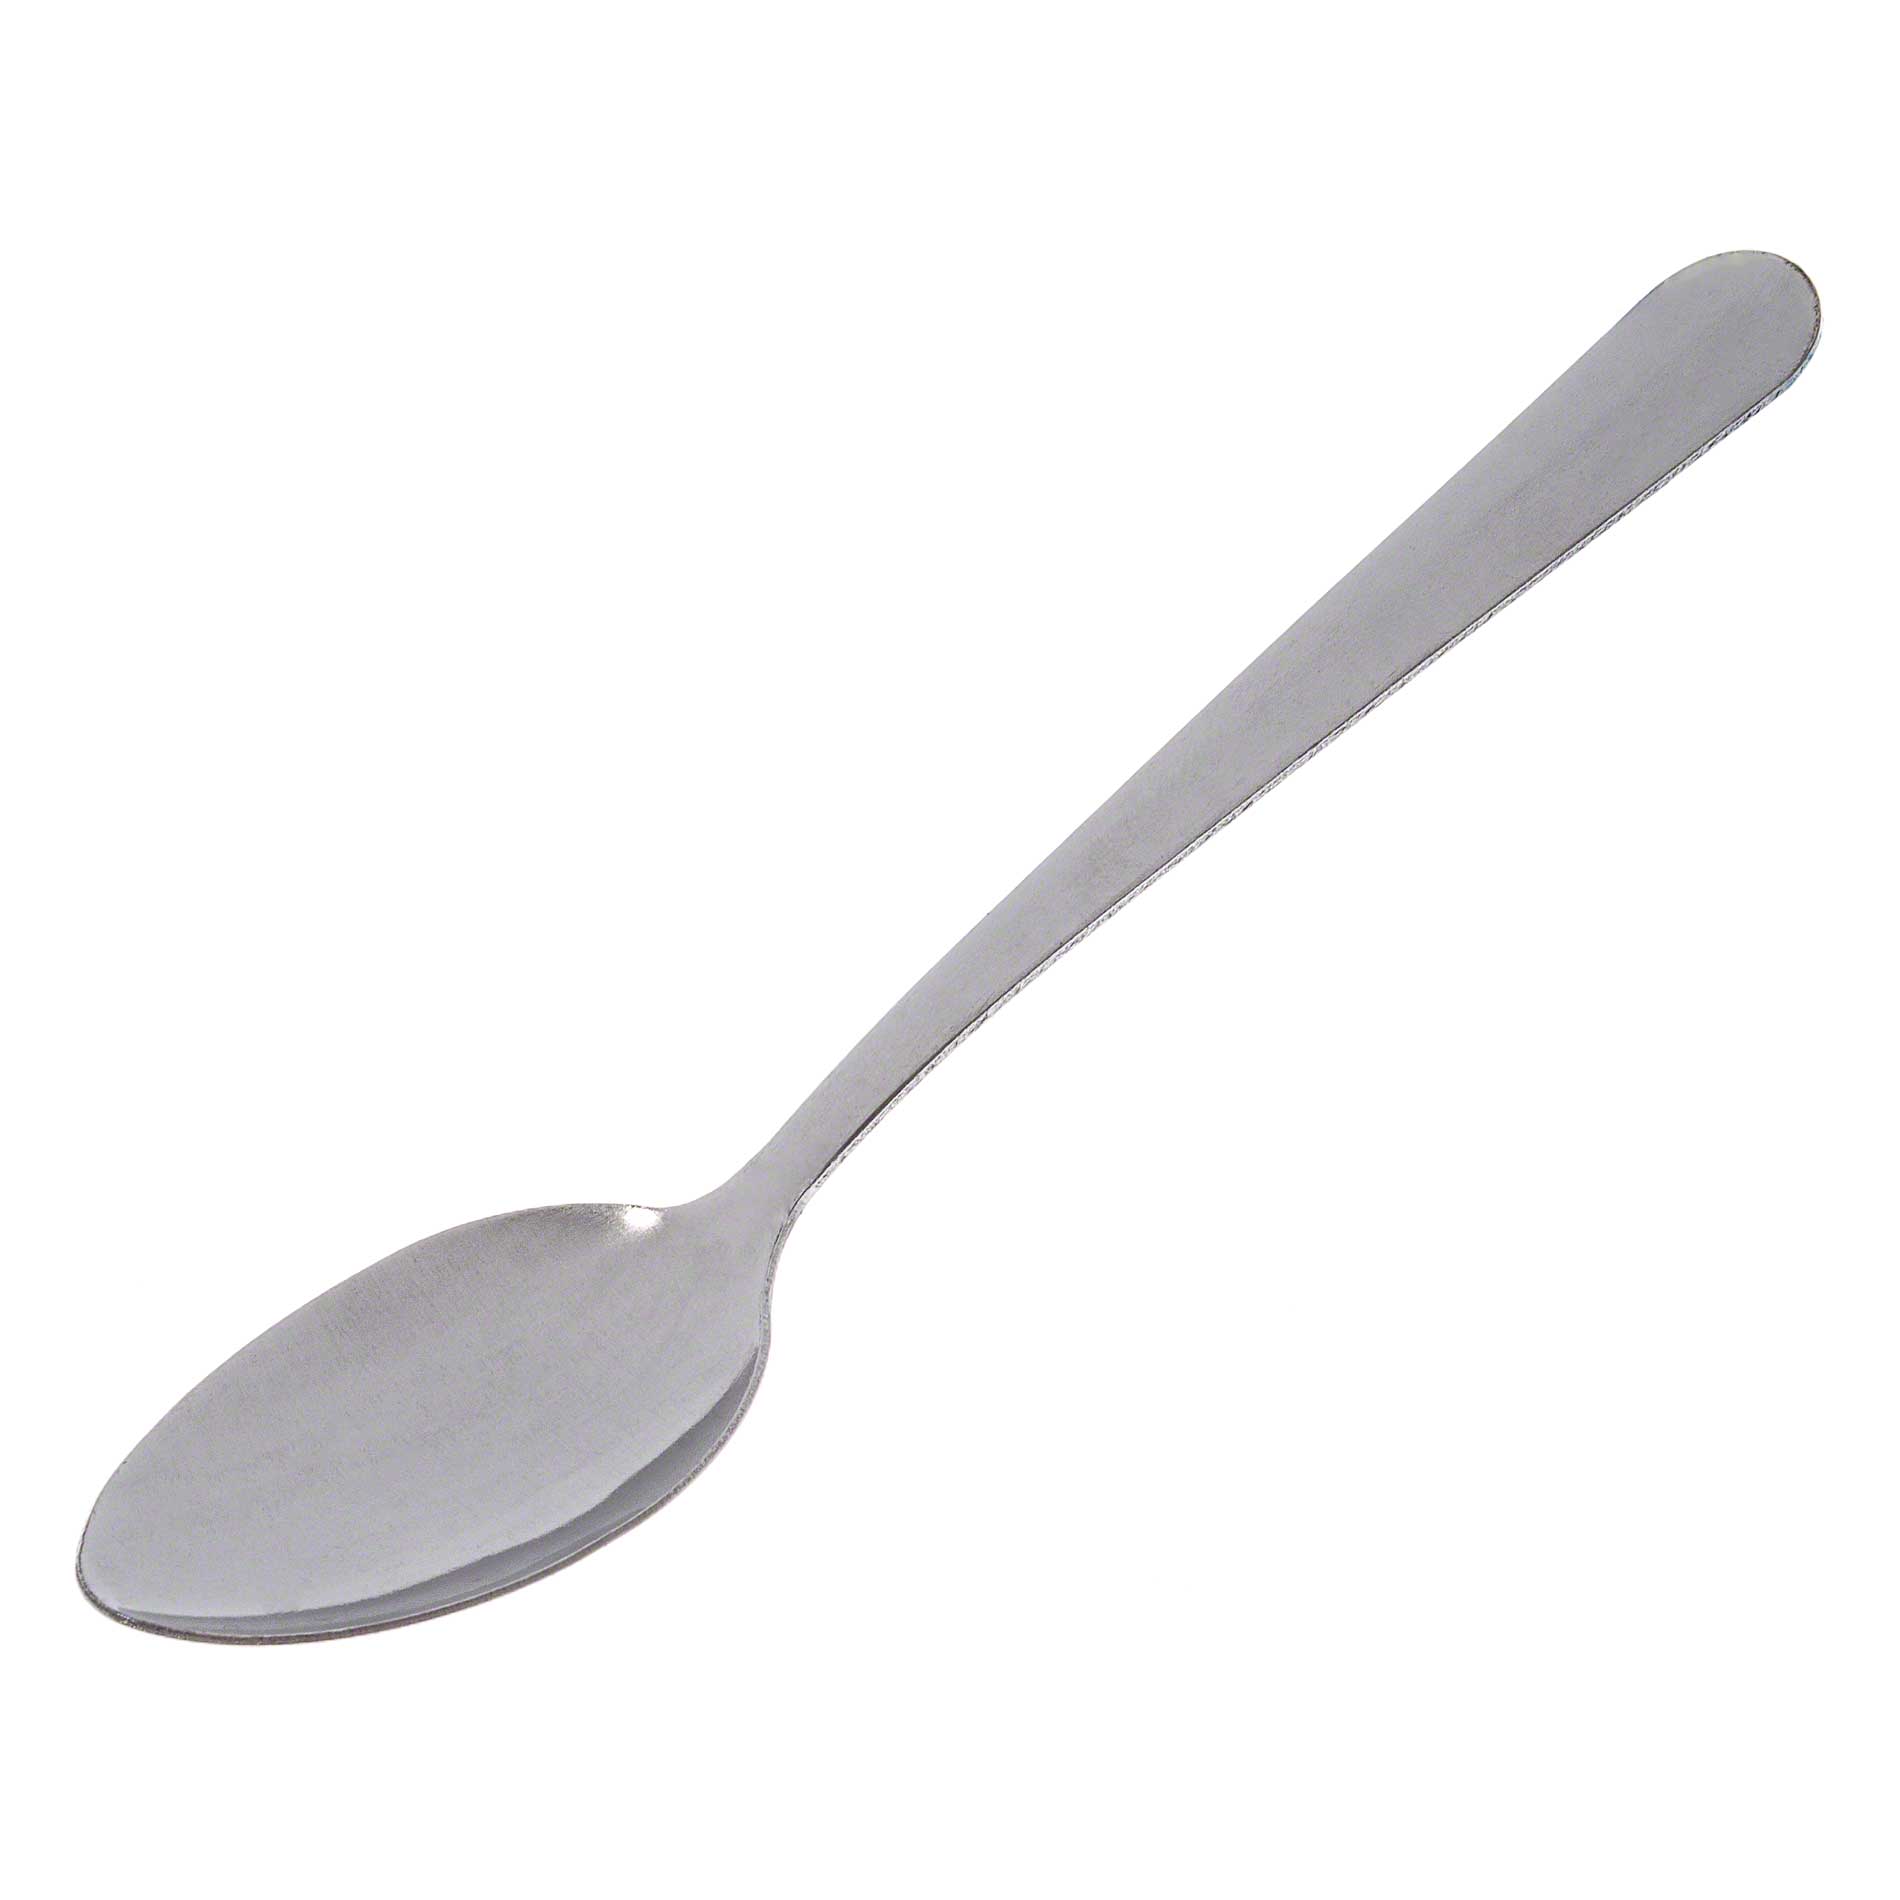 Free silver spoon.